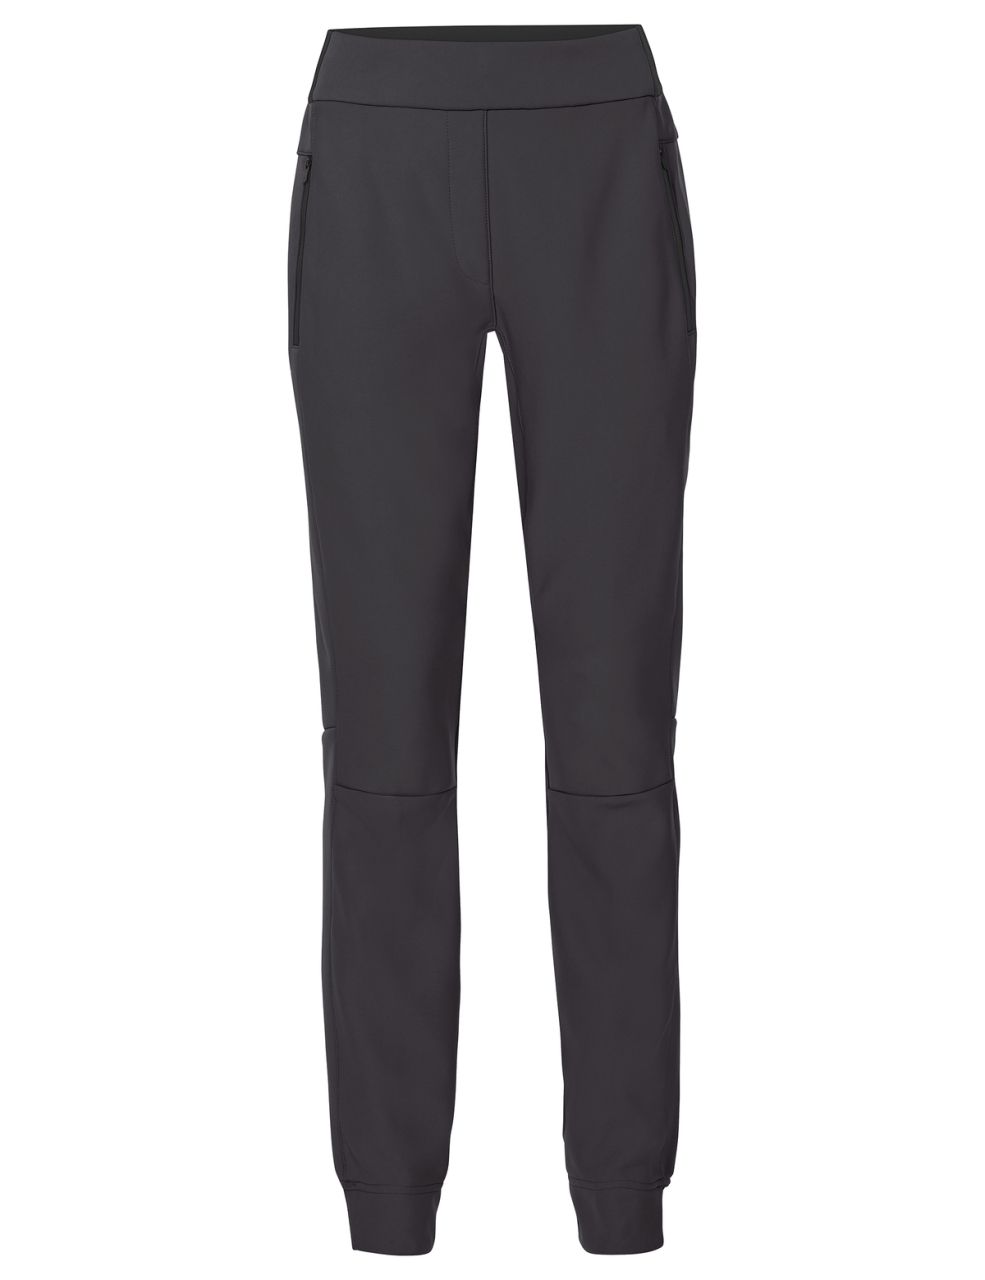 Vaude - W's Neyland Warm Pants - Recycled Polyester - Weekendbee - sustainable sportswear